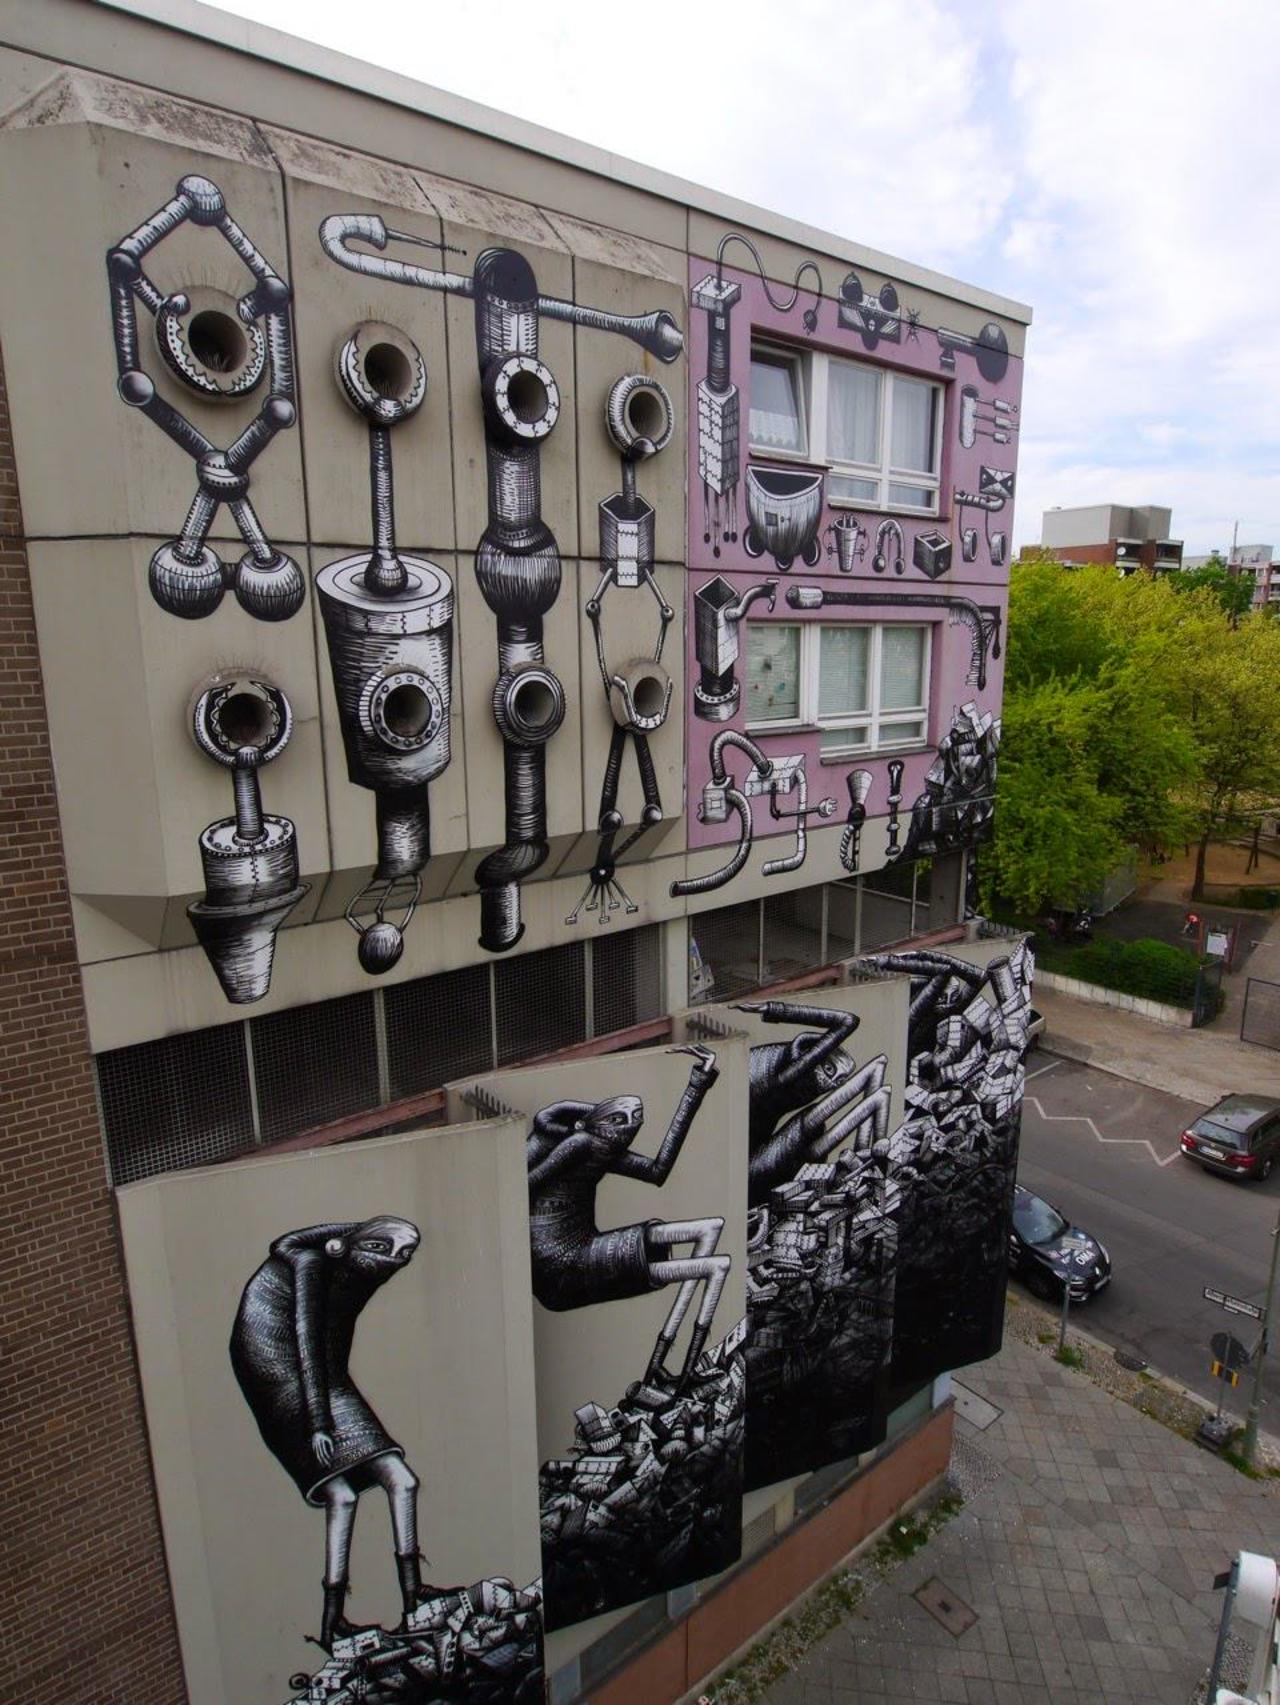 #Streetart #urbanart #graffiti #painting #mural by English #artist Phlegm in Berlin, Germany http://t.co/lDdngOxgpg